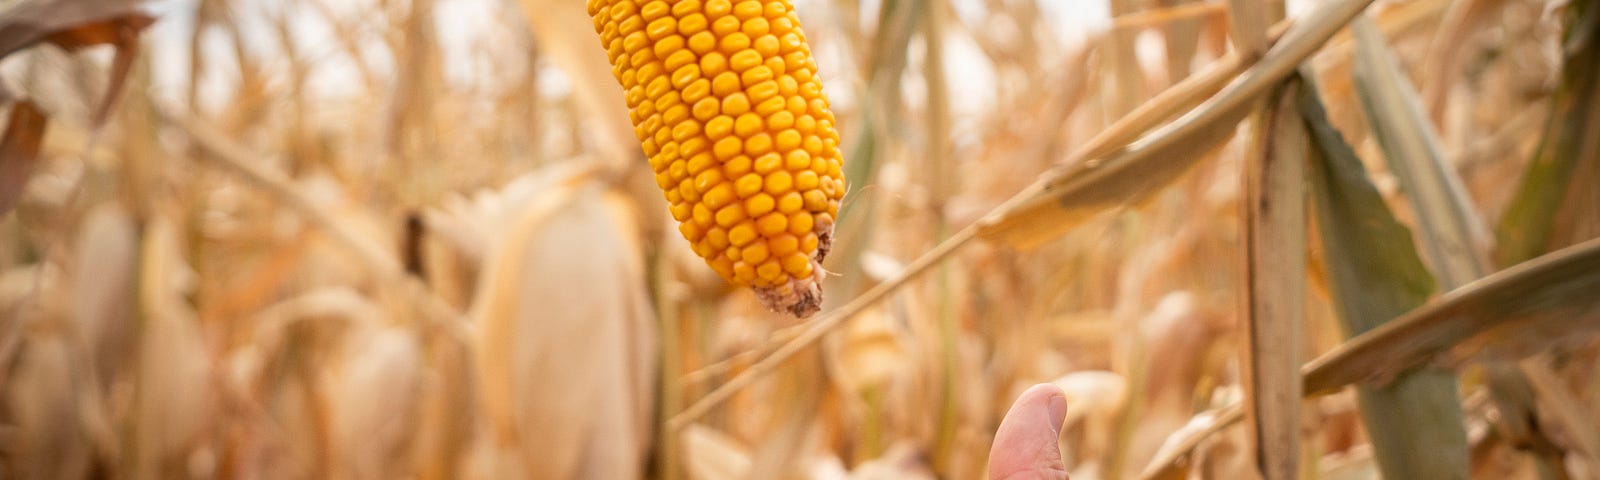 A hand tossing up an ear of field corn in an autumn cornfield.